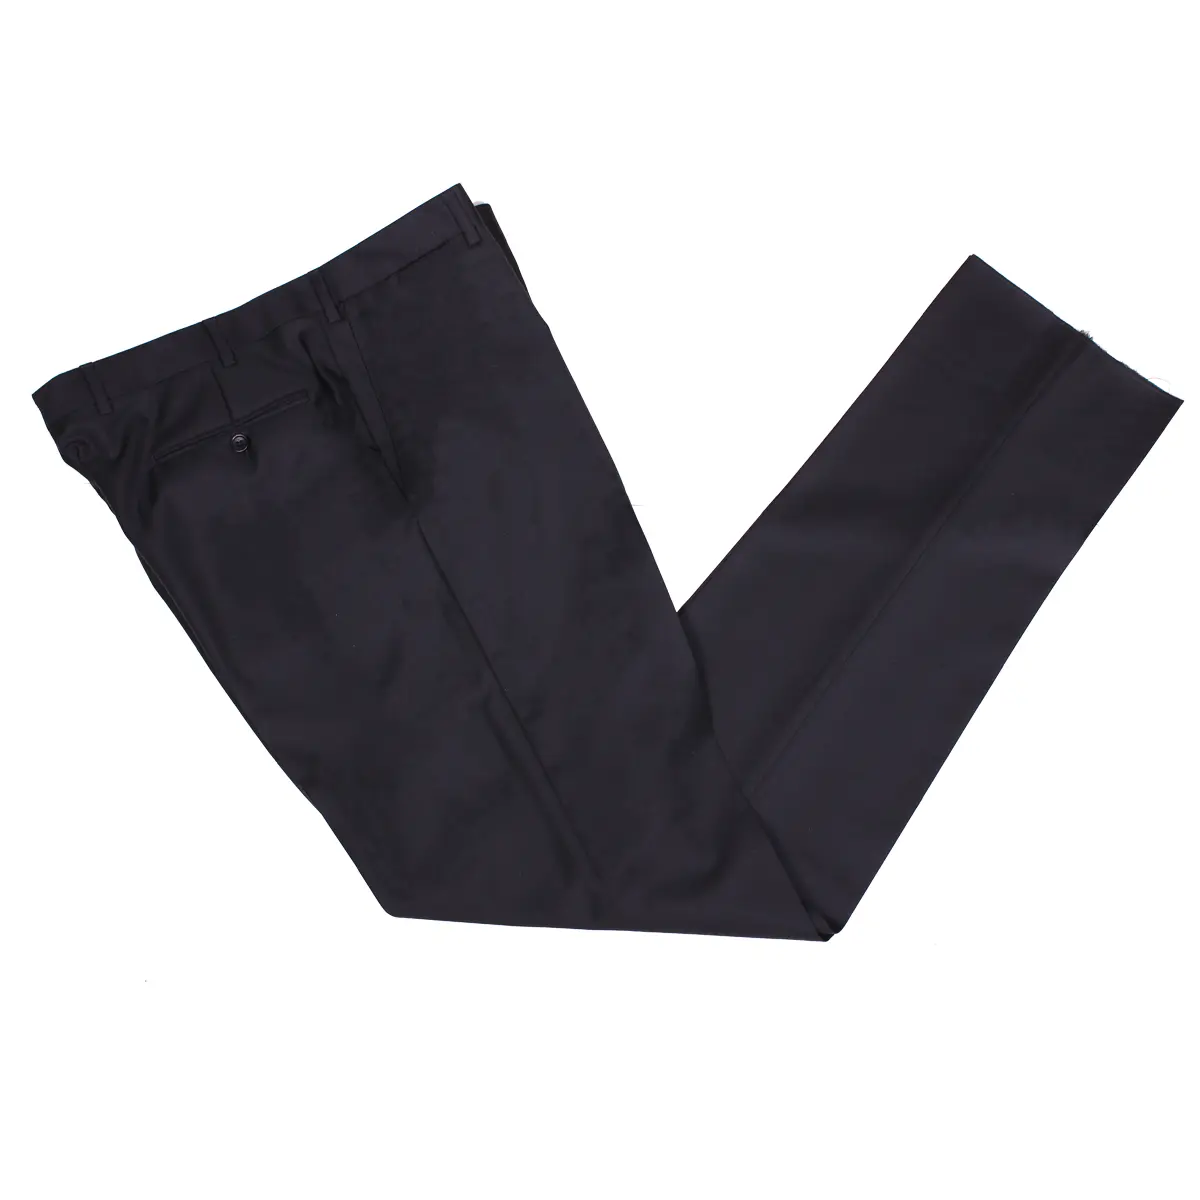 Black ‘Perennial’ Barberis Wool Trousers  Robert Old   